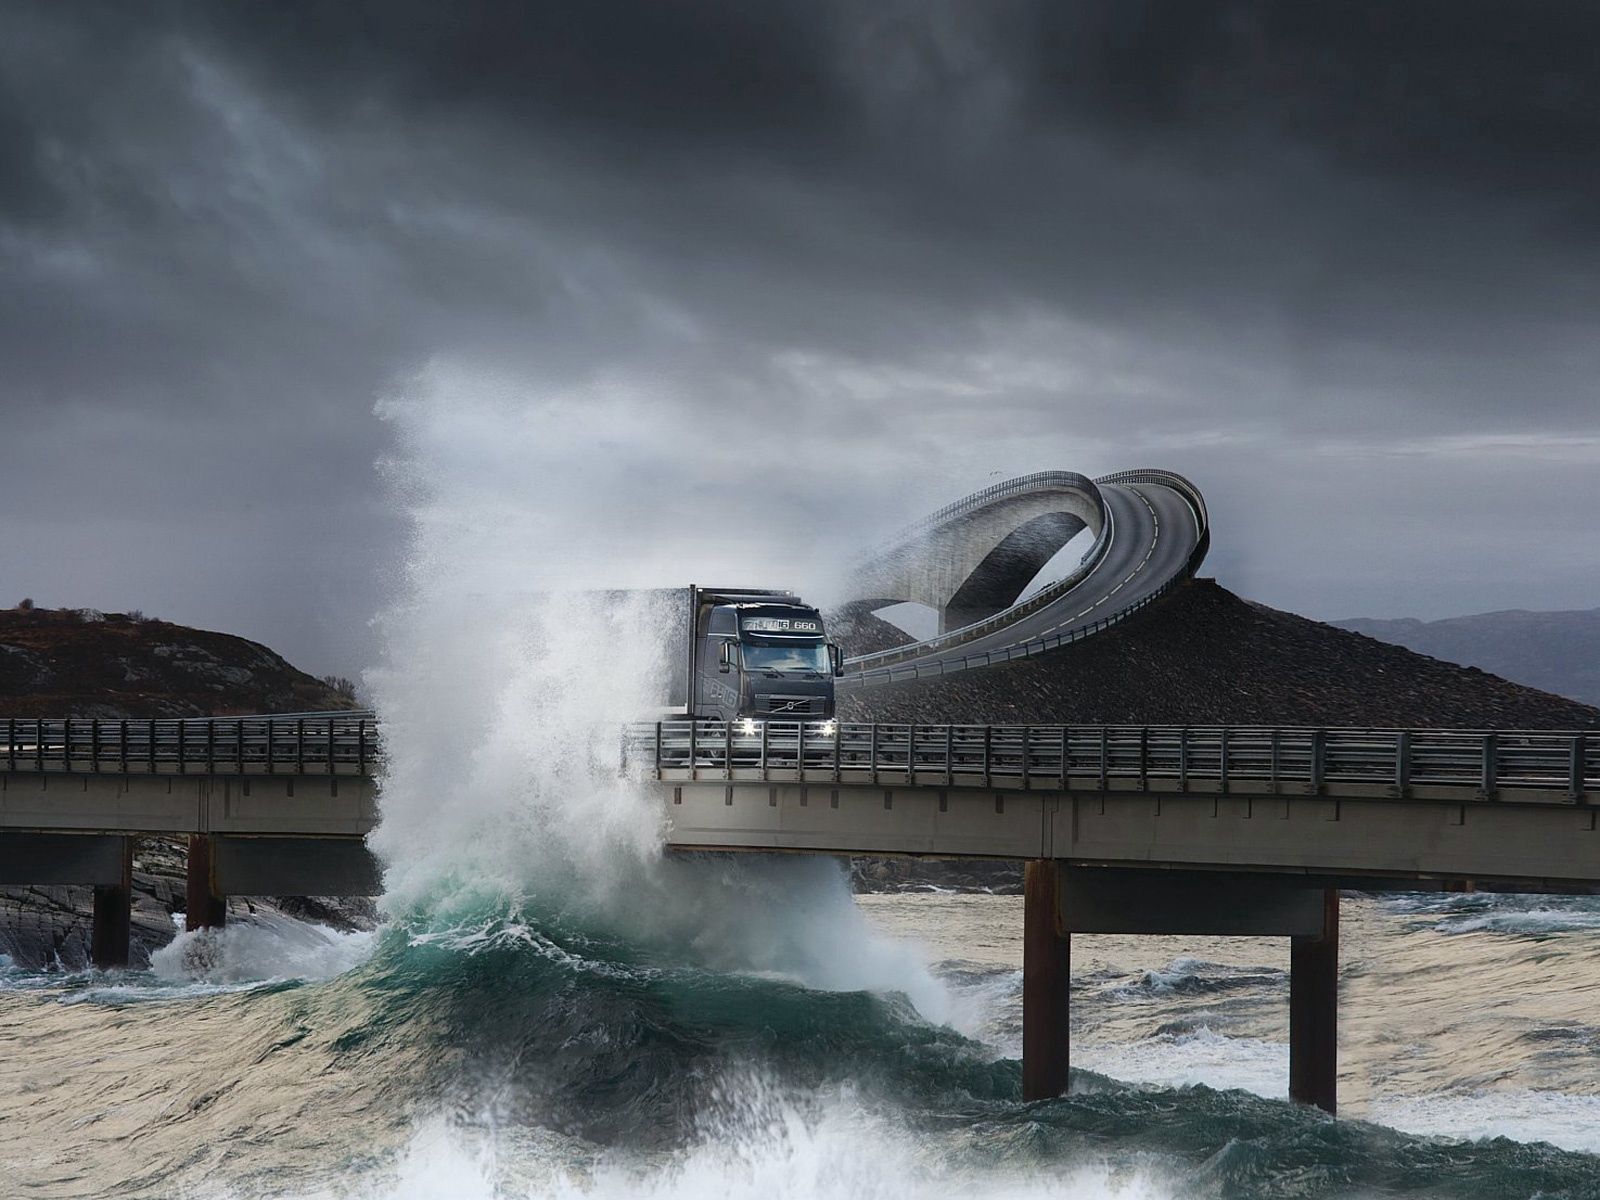 spray, storm, nature, sea, road, bridge, truck, lorry